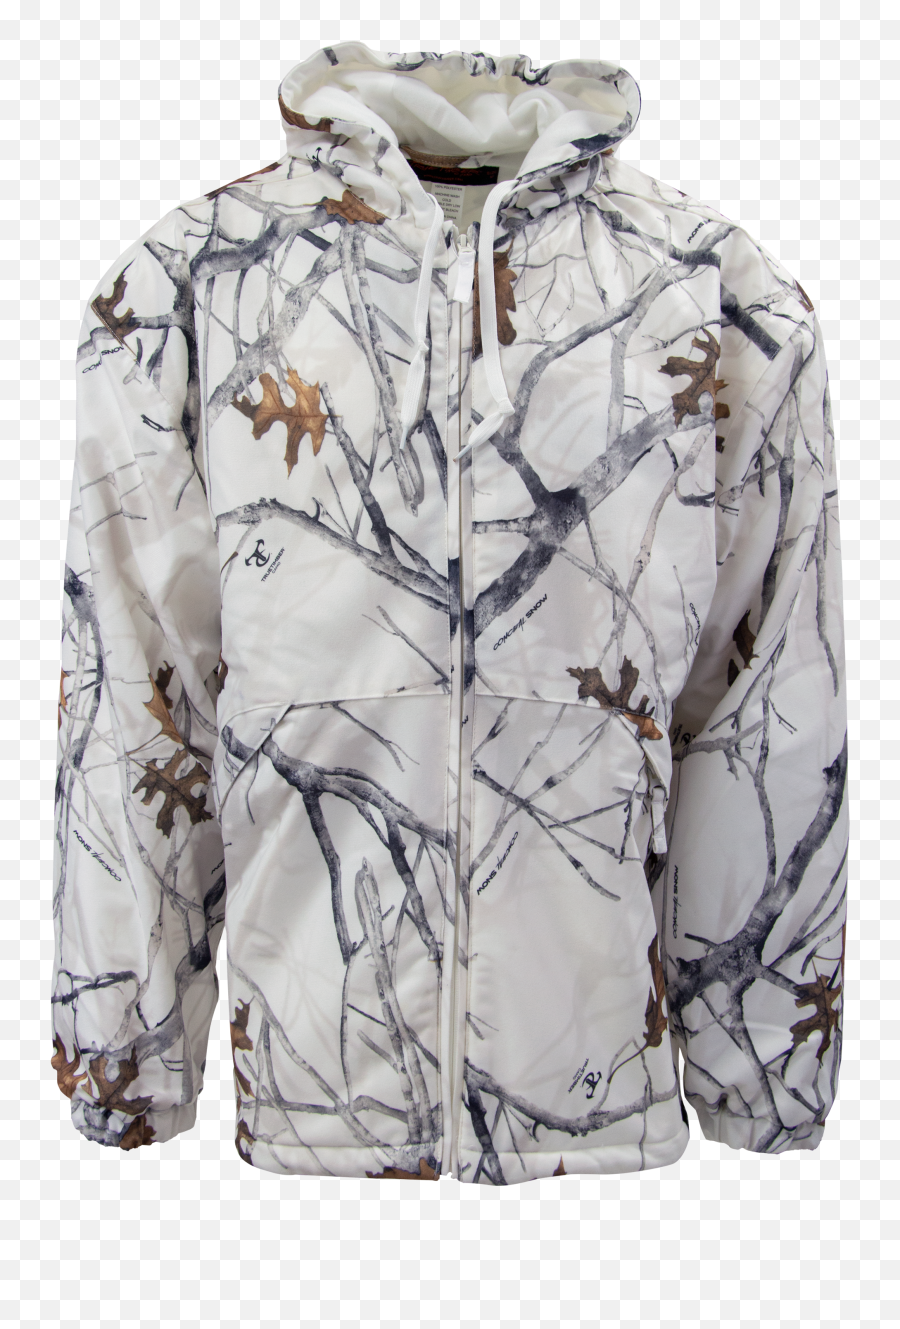 Waterproof Snow Cover Suit Parka - Conceal Snow Hooded Emoji,Snow Pile Png